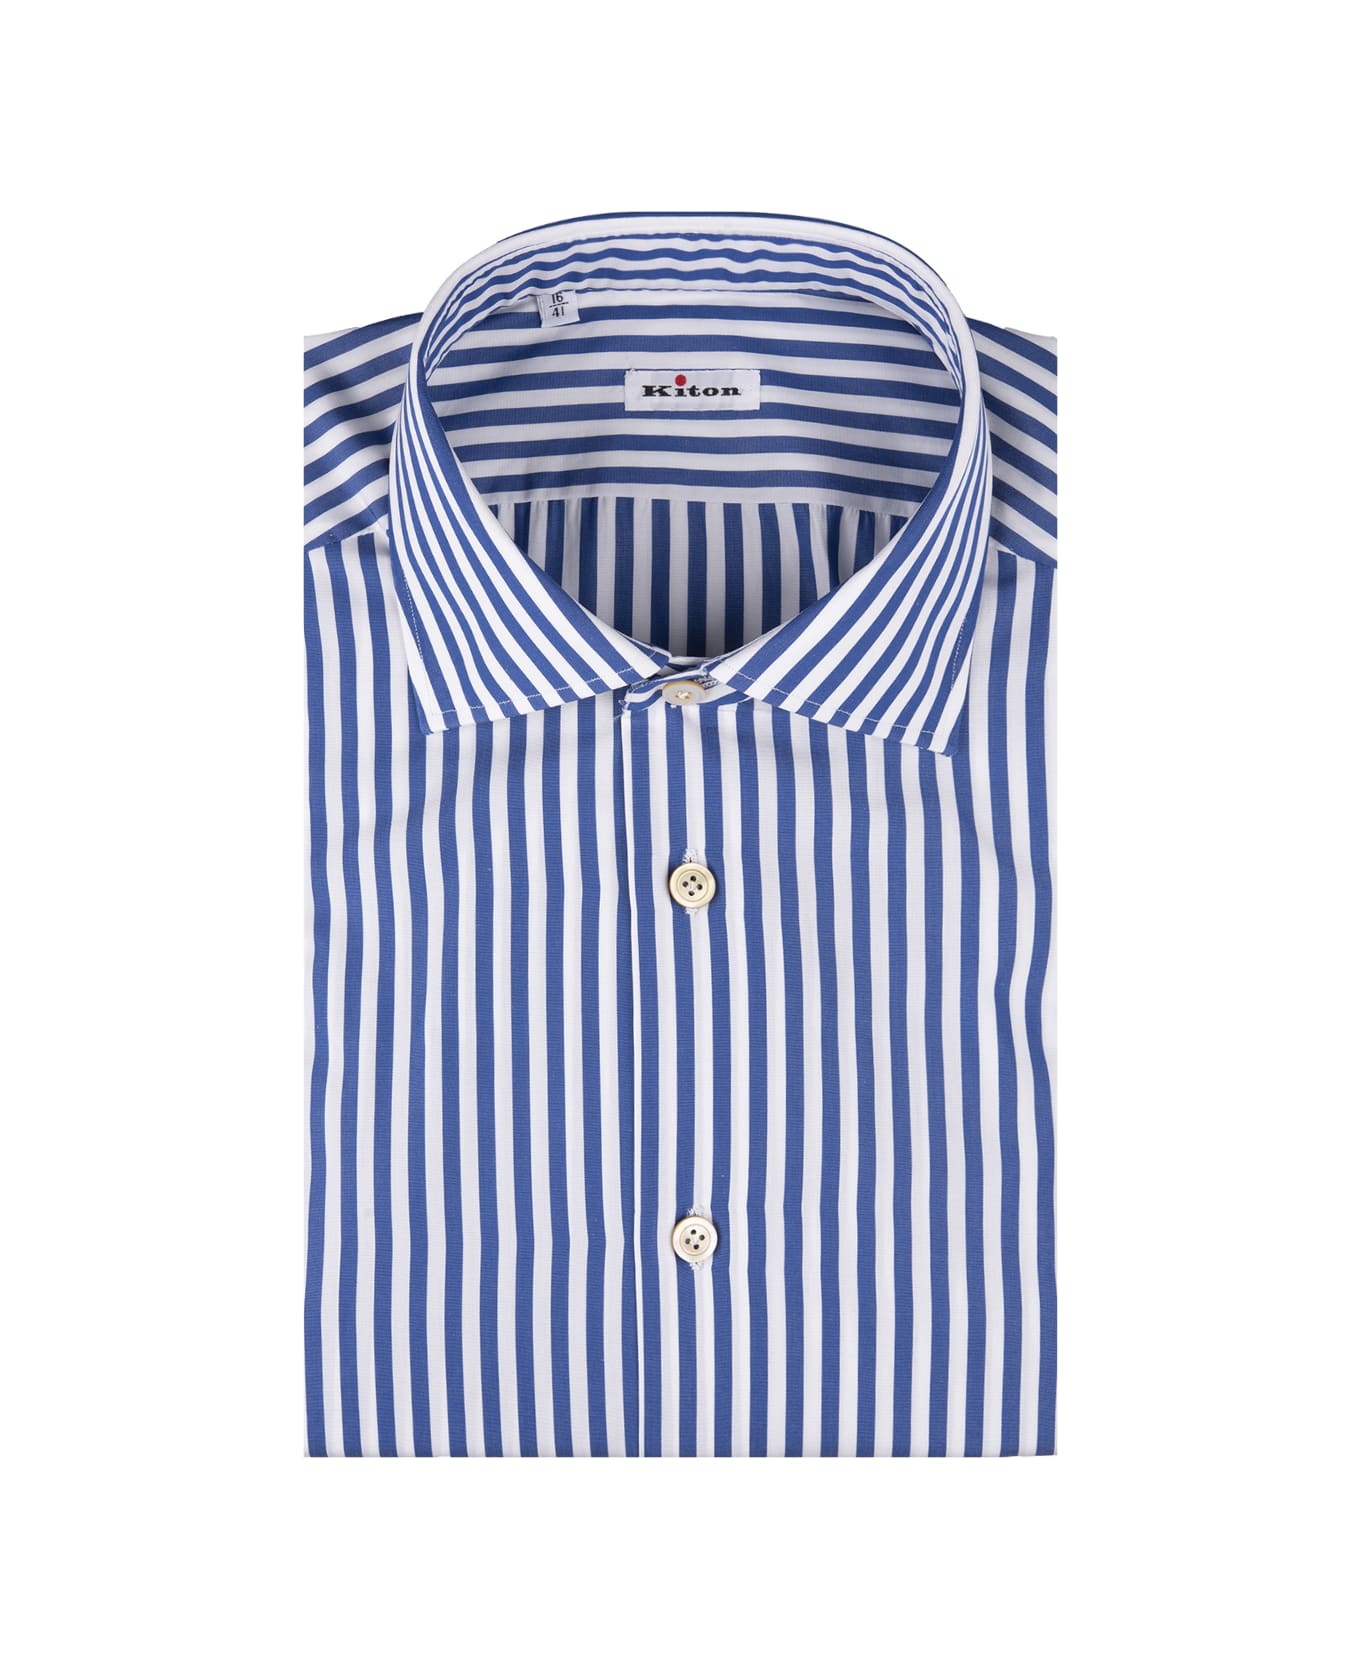 Kiton Blue And White Striped Poplin Shirt - Blue シャツ